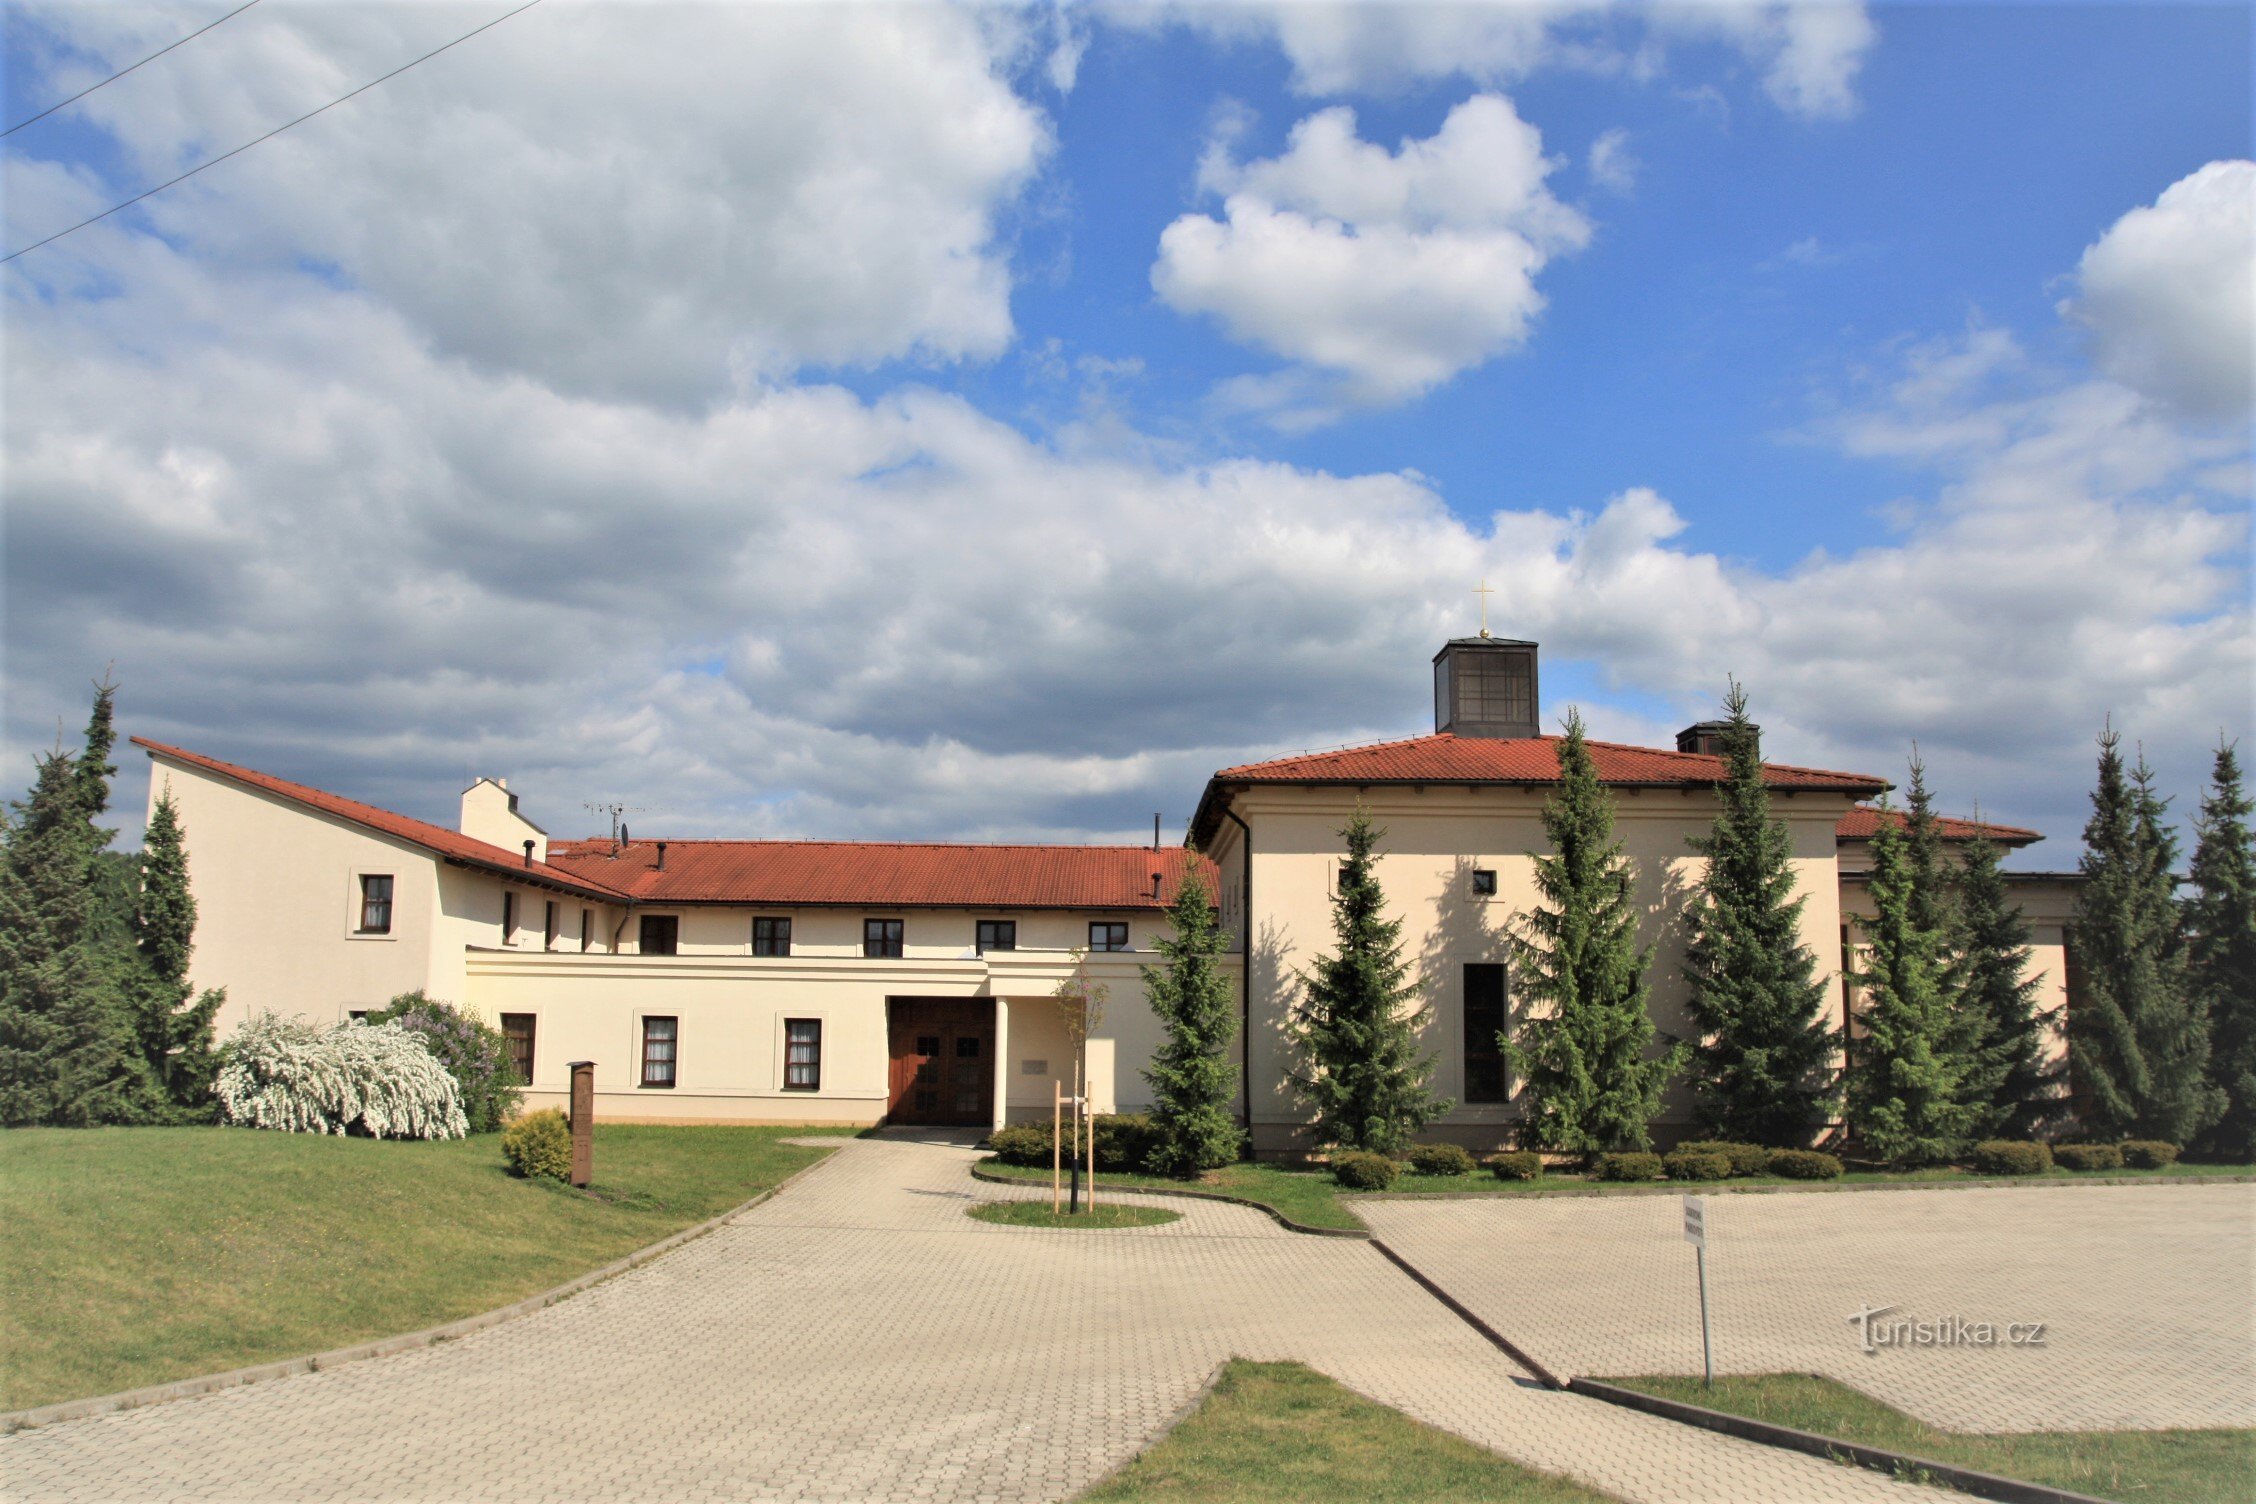 Ruten starter i Soběšice nær Klarisek klosteret